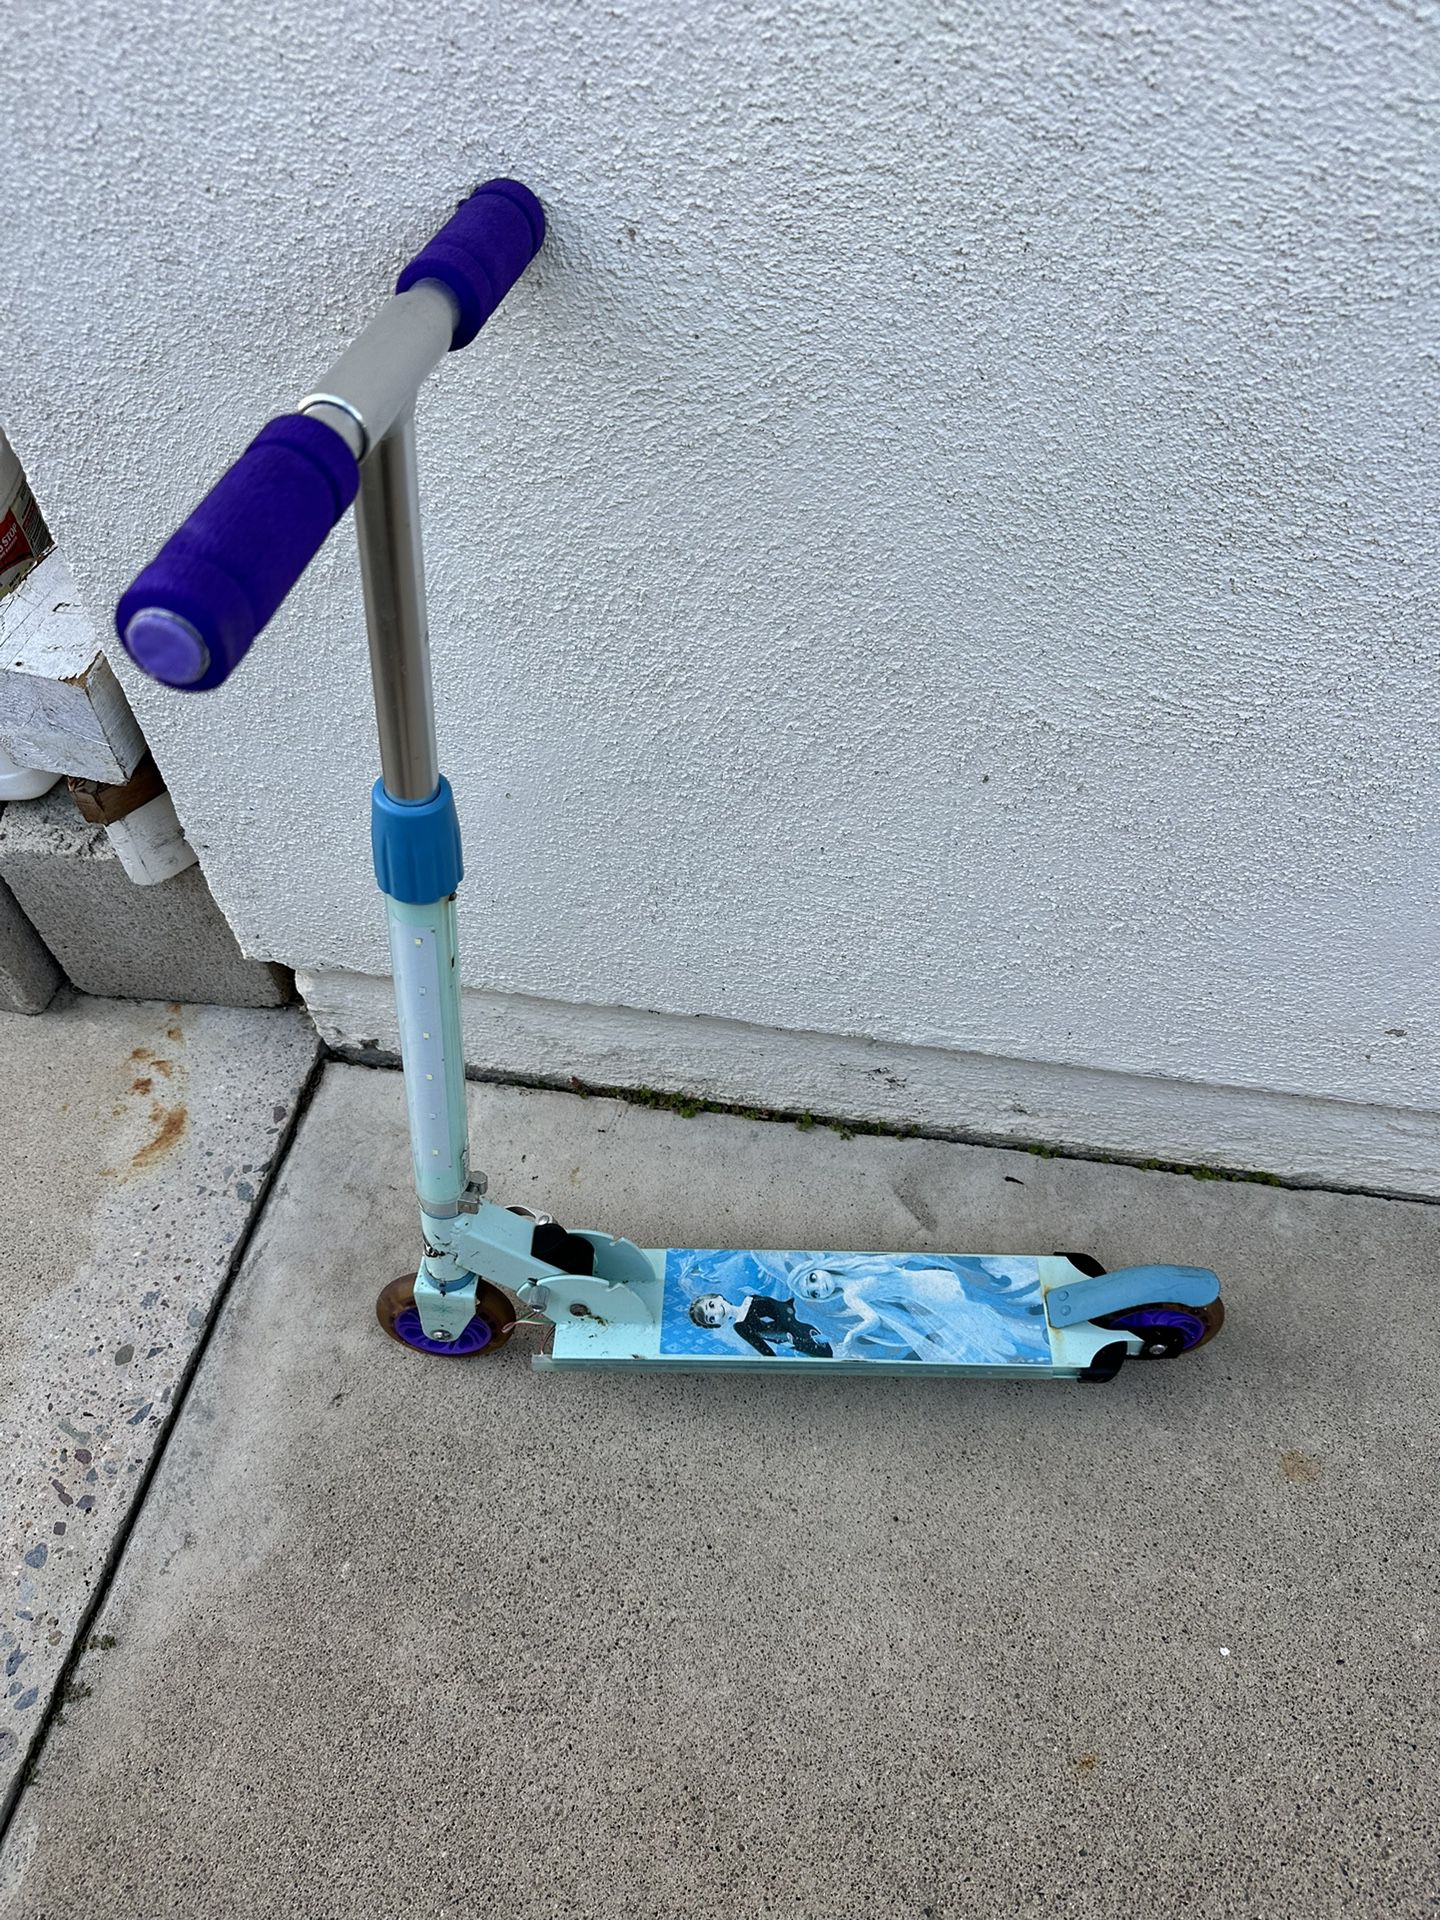 Frozen Scooter